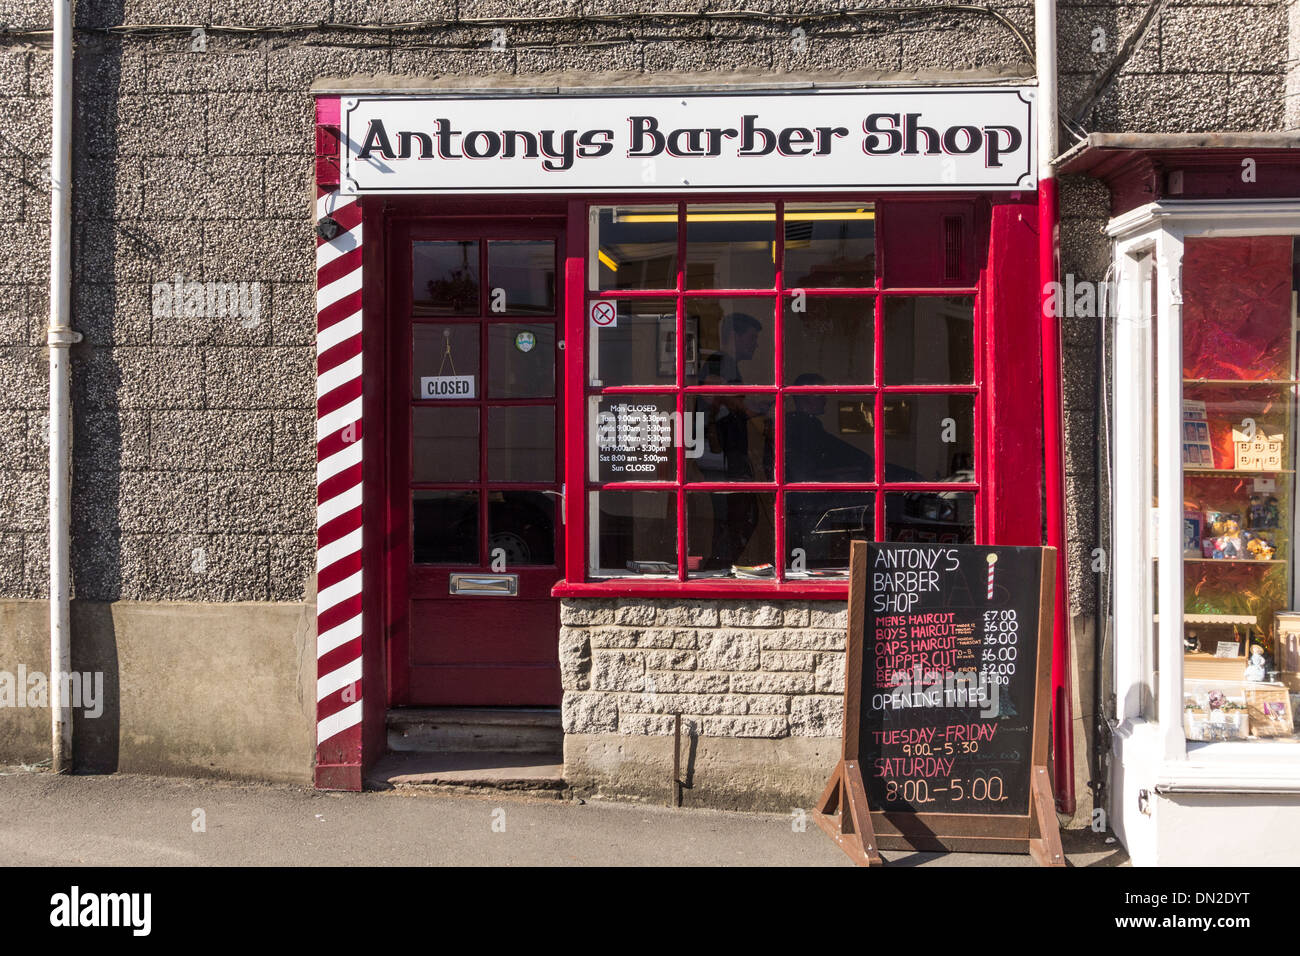 Antony's Barber Shop, Wotton under Edge, Gloucestershire, UK Stock Photo